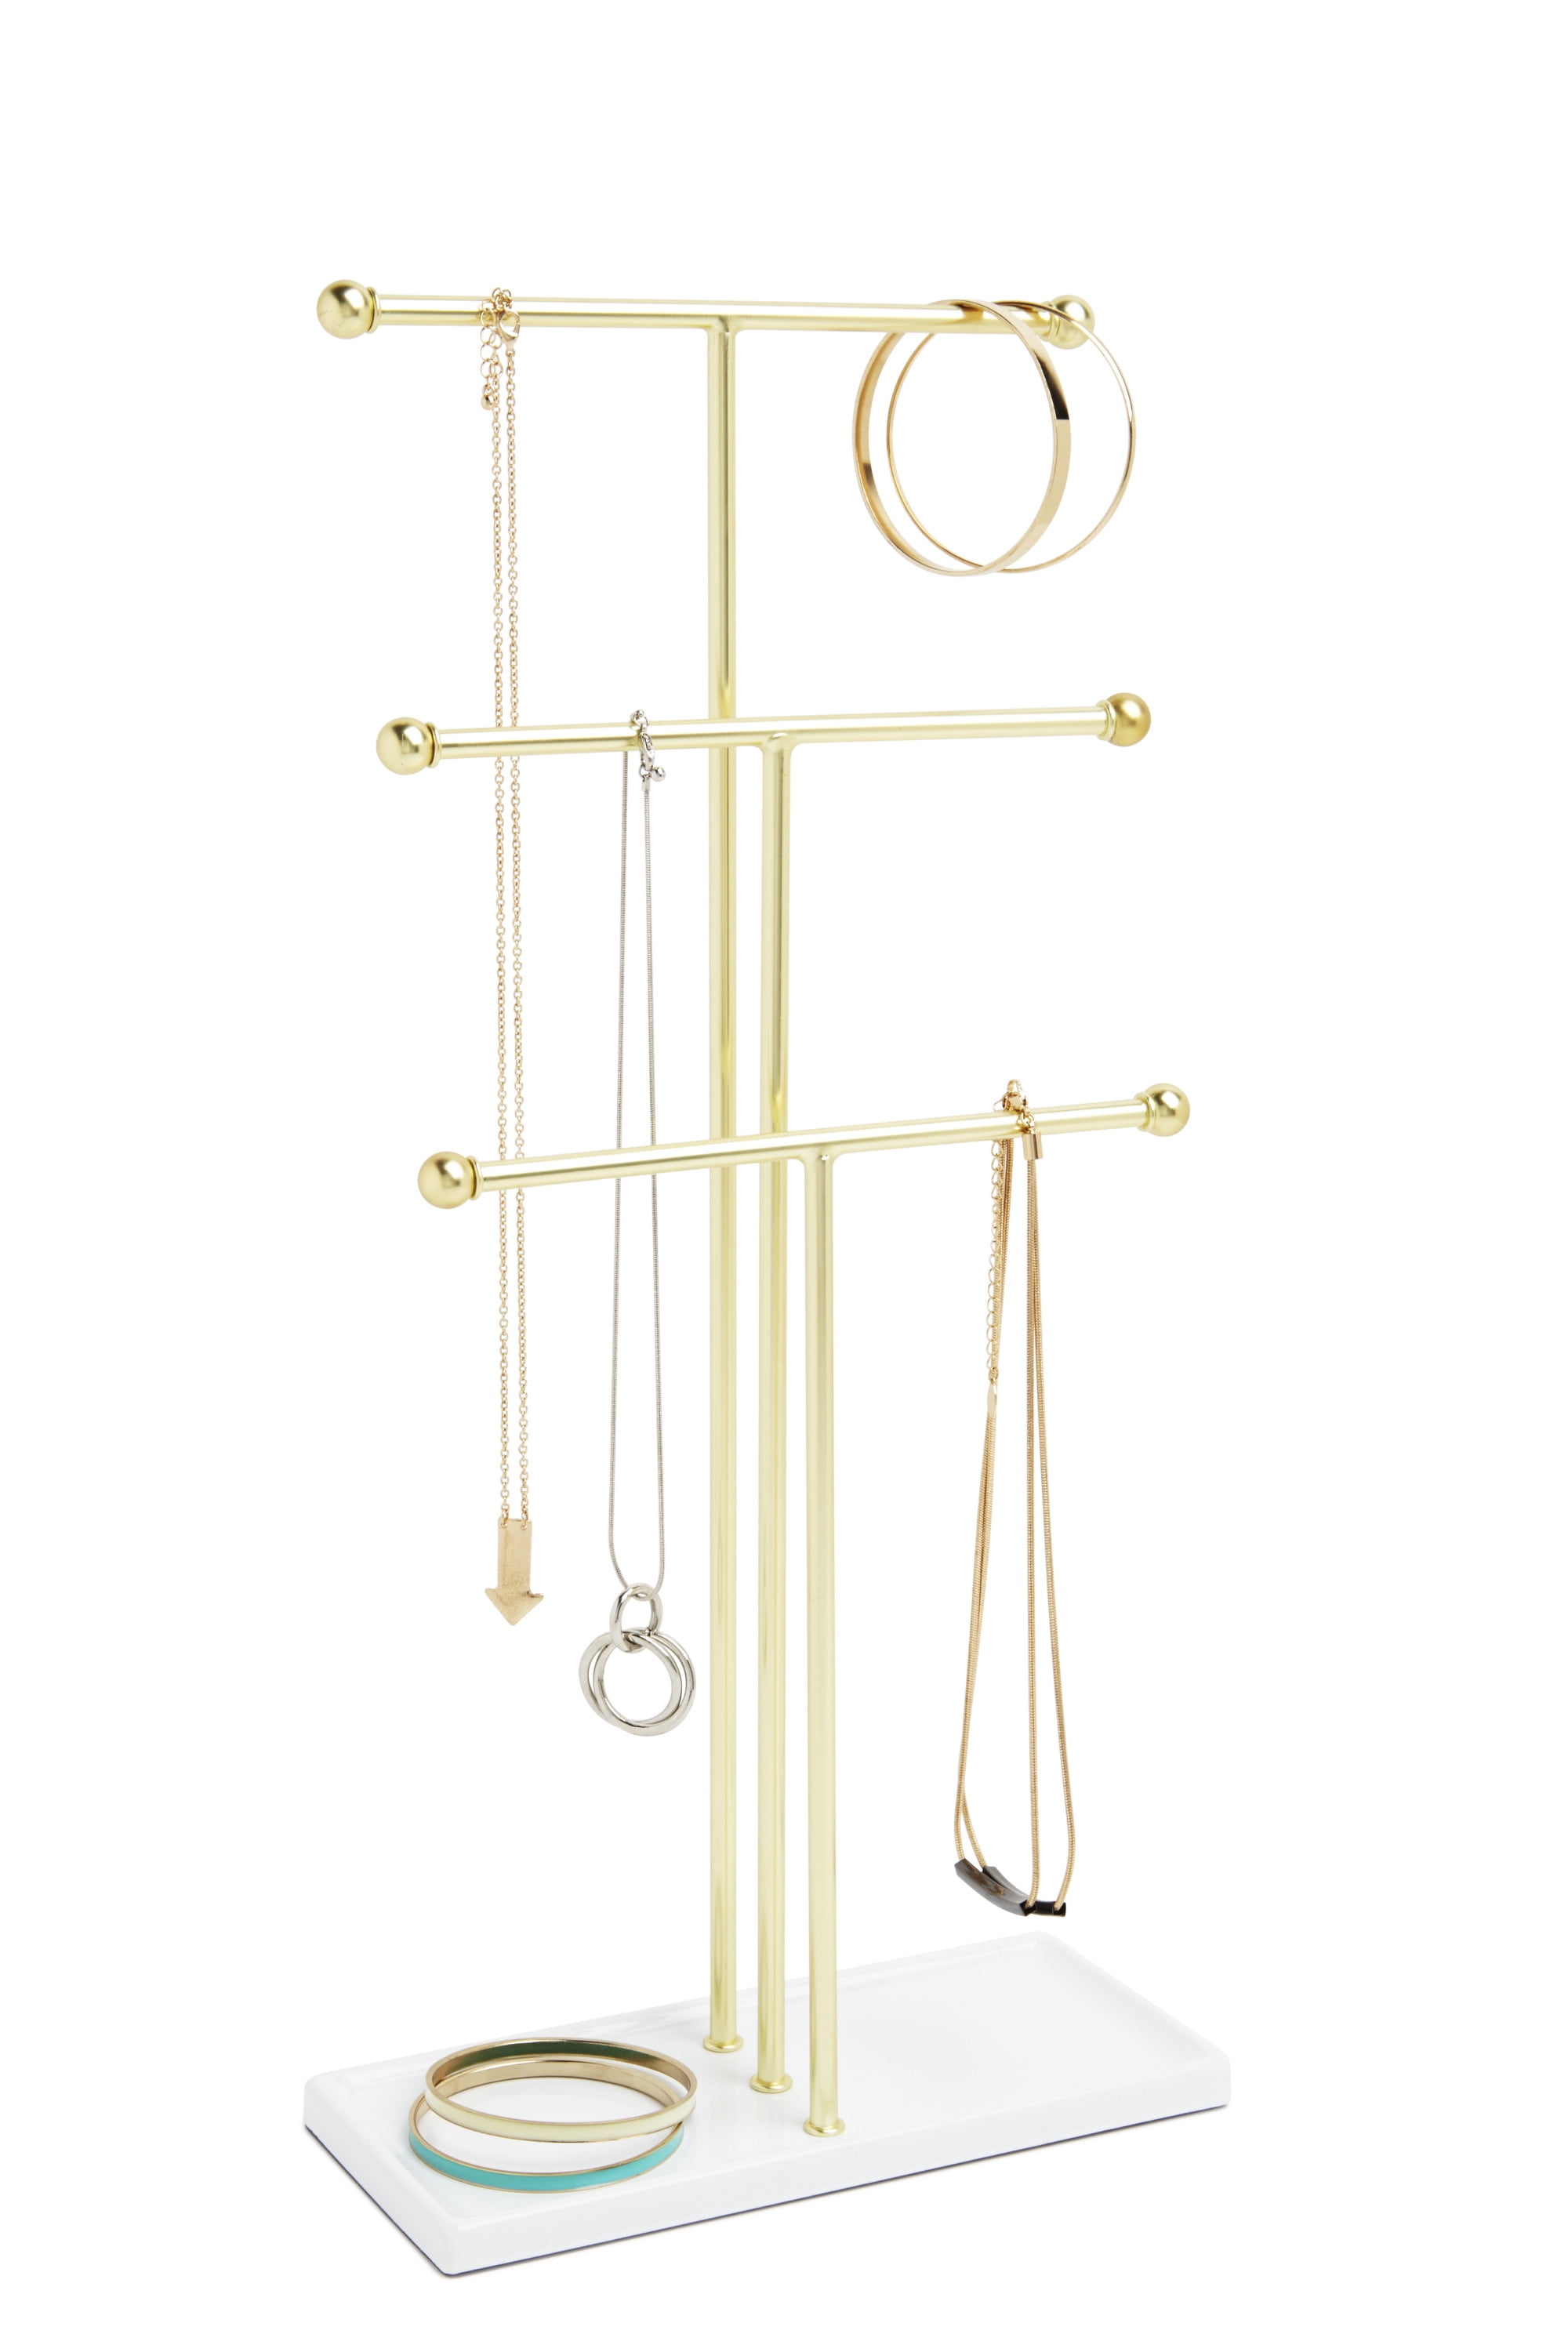 Tabletop Jewelry Holder Organizer Earring Necklace Shelf Rack Storage Display US 